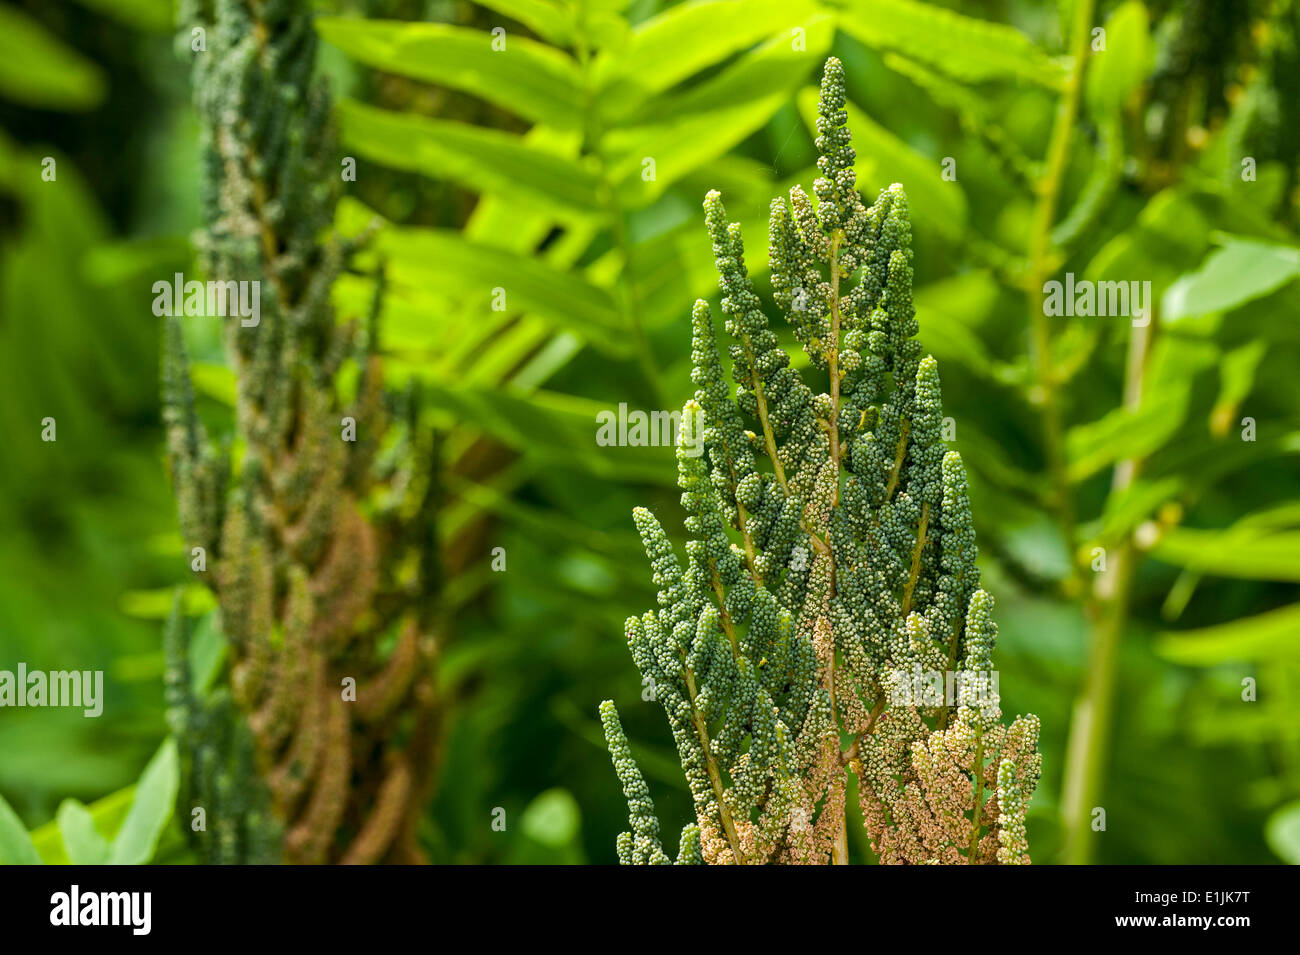 Royal fern / flowering fern (Osmunda regalis) showing fertile and sterile fronds in spring Stock Photo